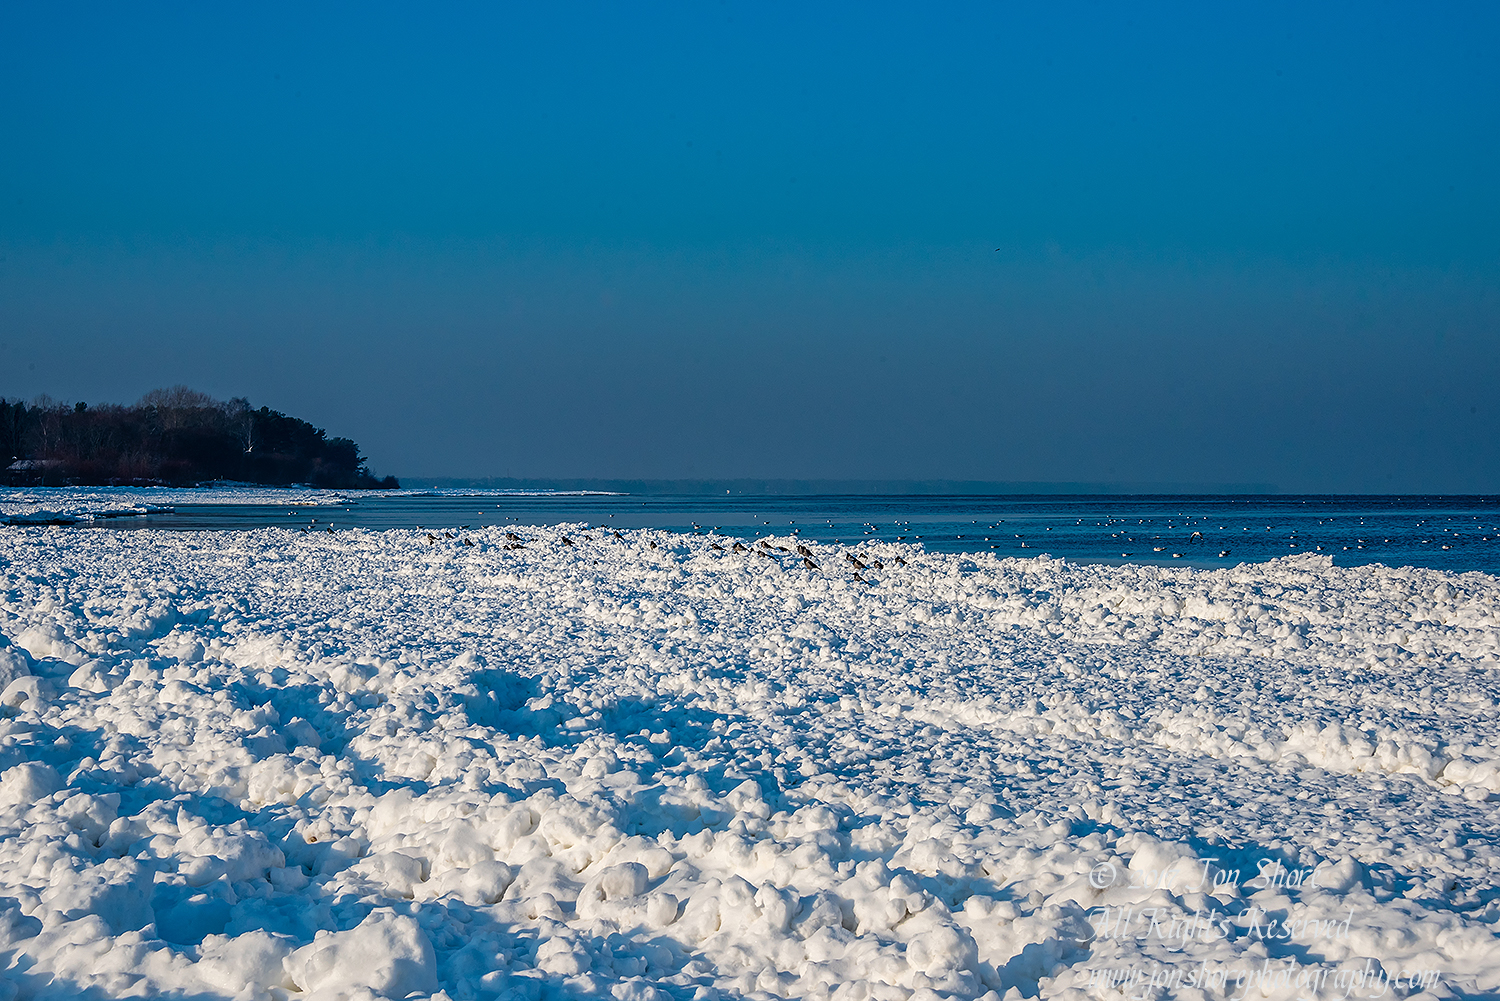 Winter at a Frozen Baltic Sea Beach. Nikkor 35mm